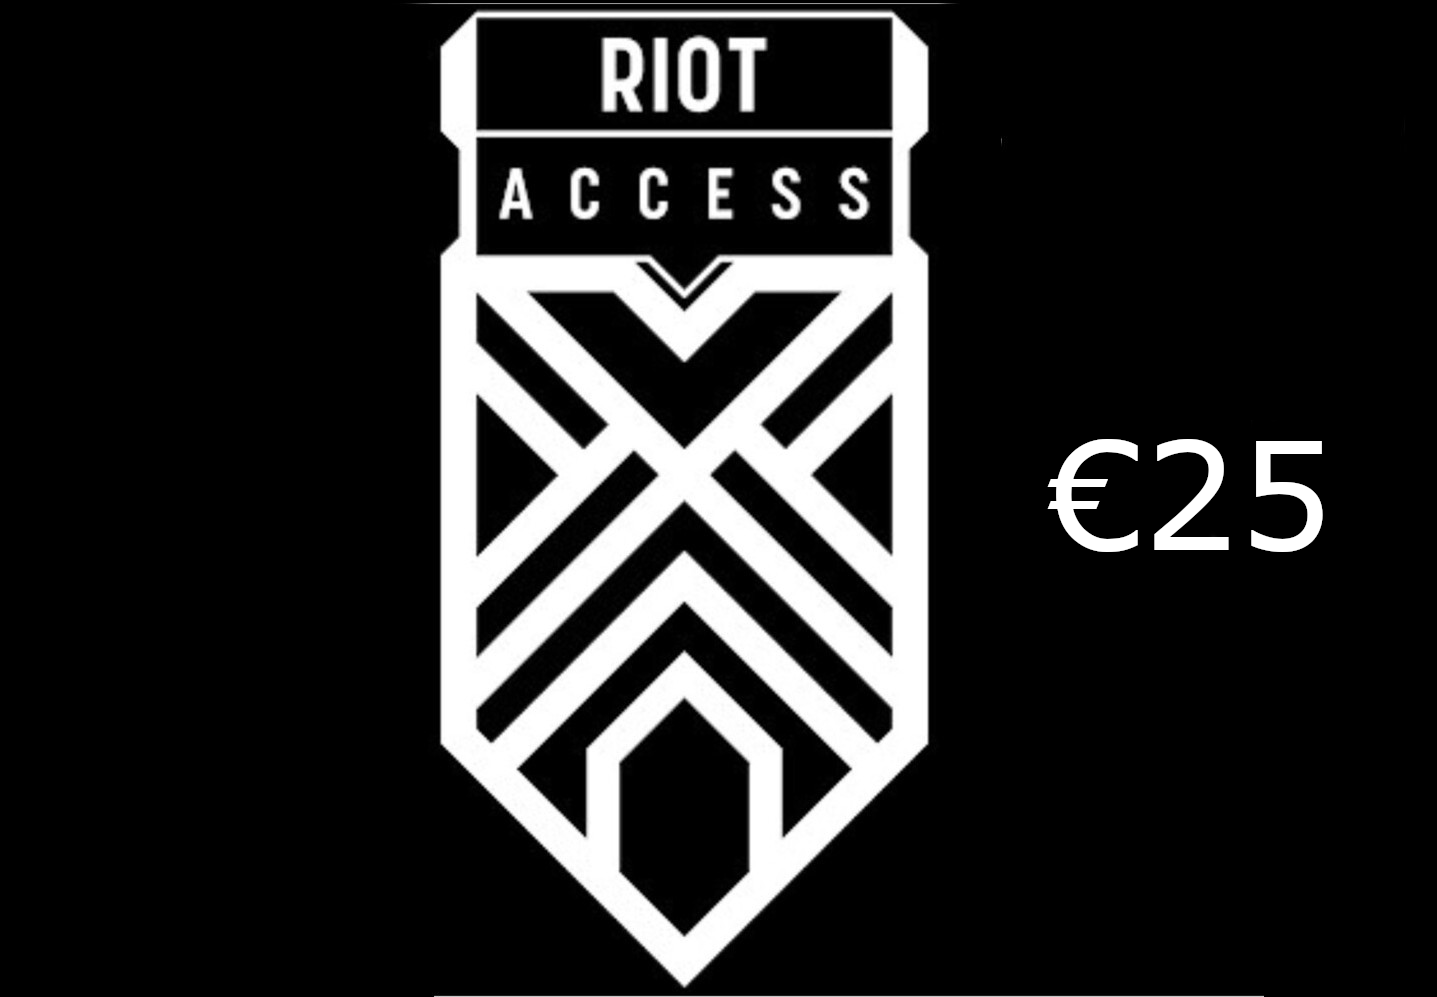 Riot Access €25 Code EU